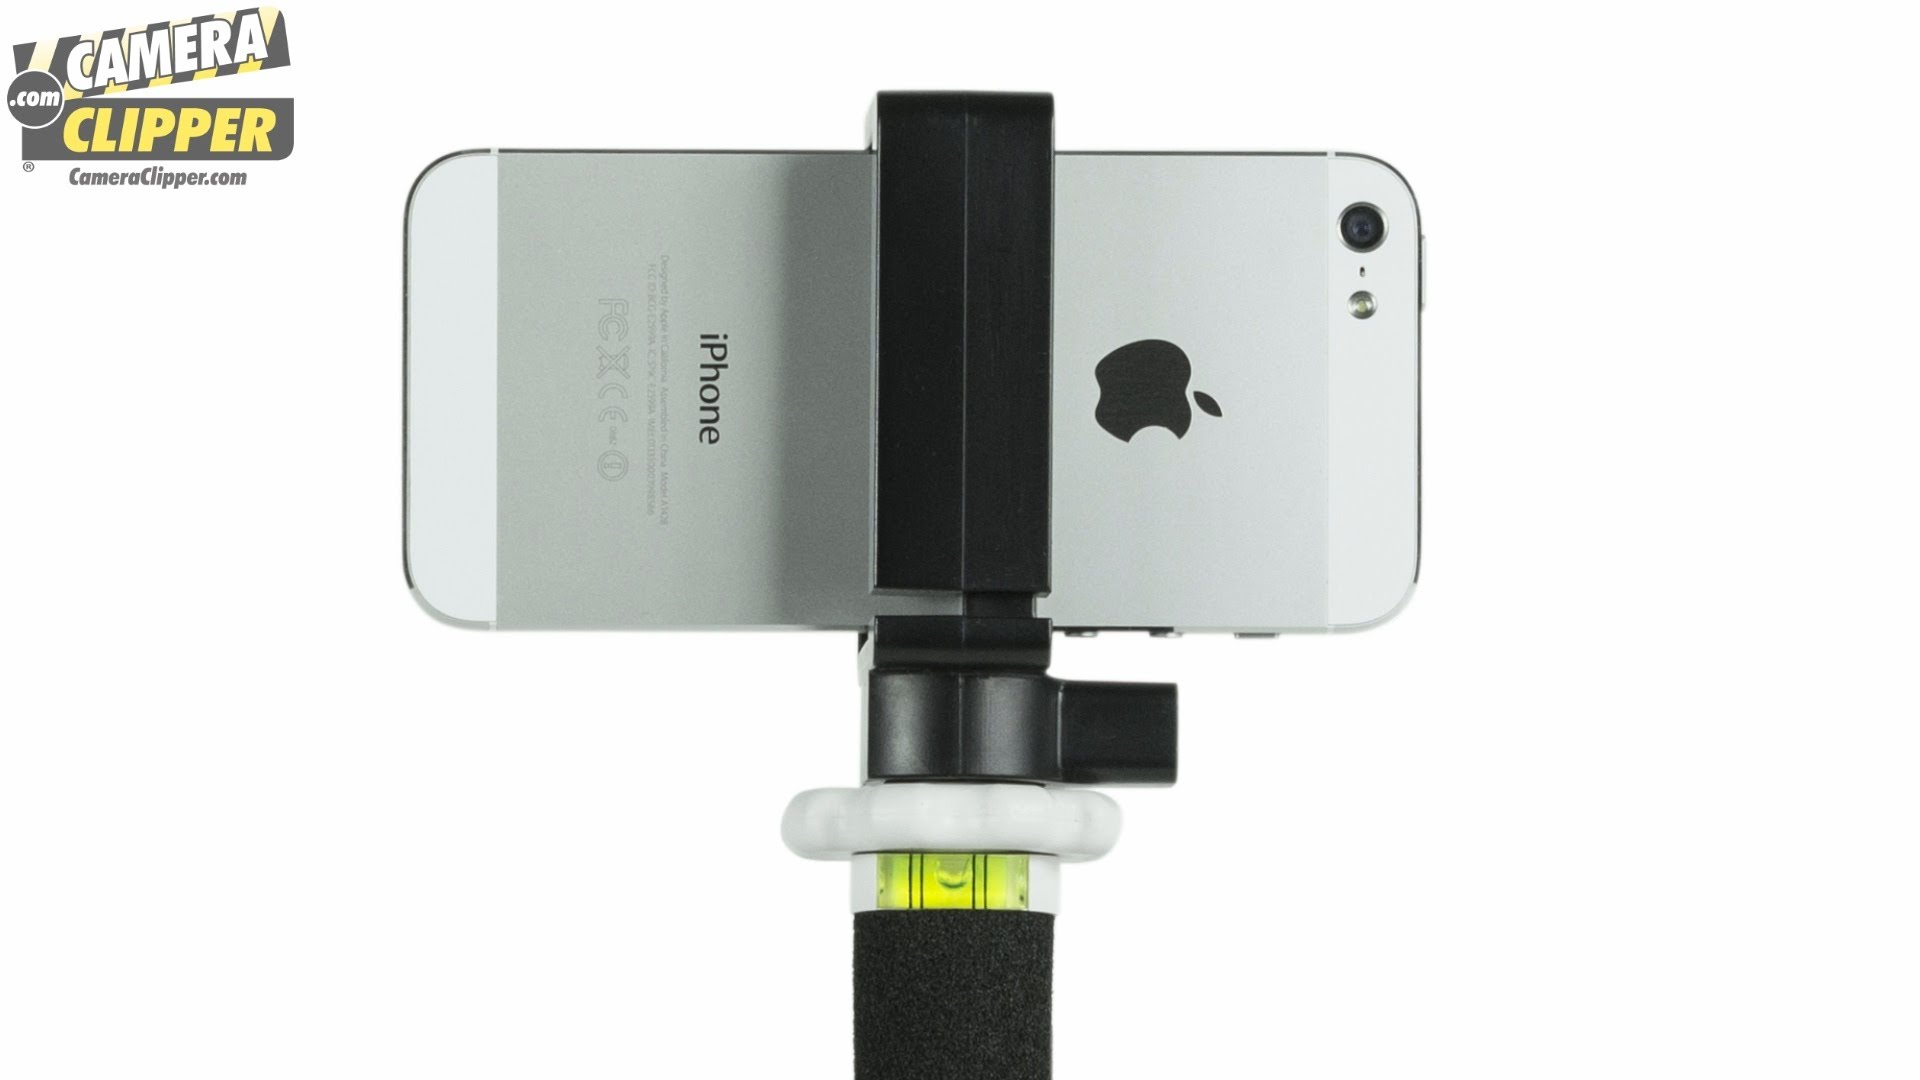 Camera Clipper for Smartphones, Action Cameras, Video Recorders and Digital Cameras